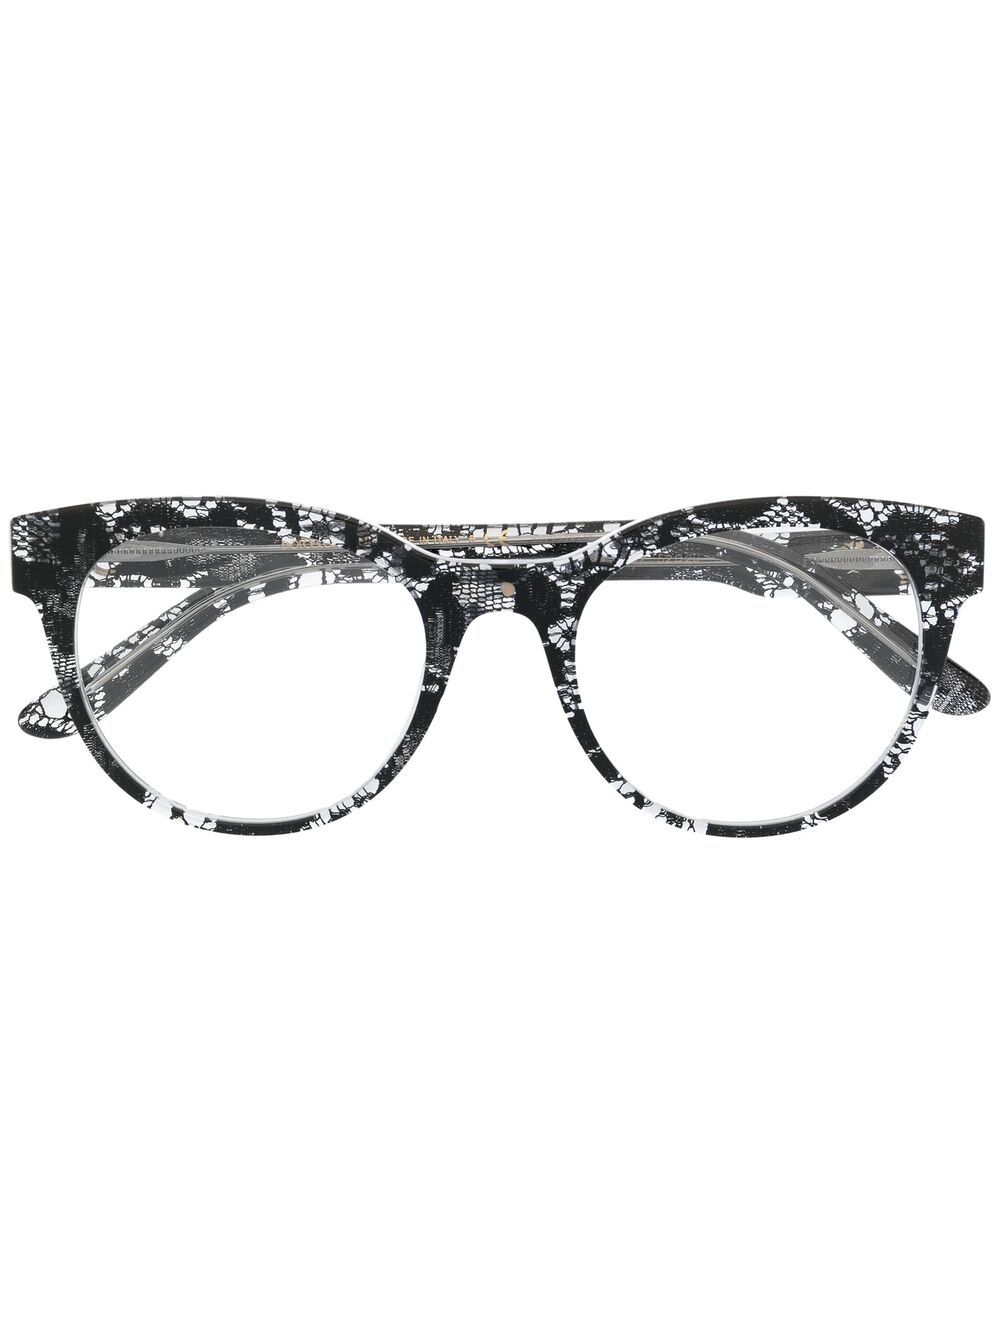 фото Dolce & gabbana eyewear очки с кружевным узором